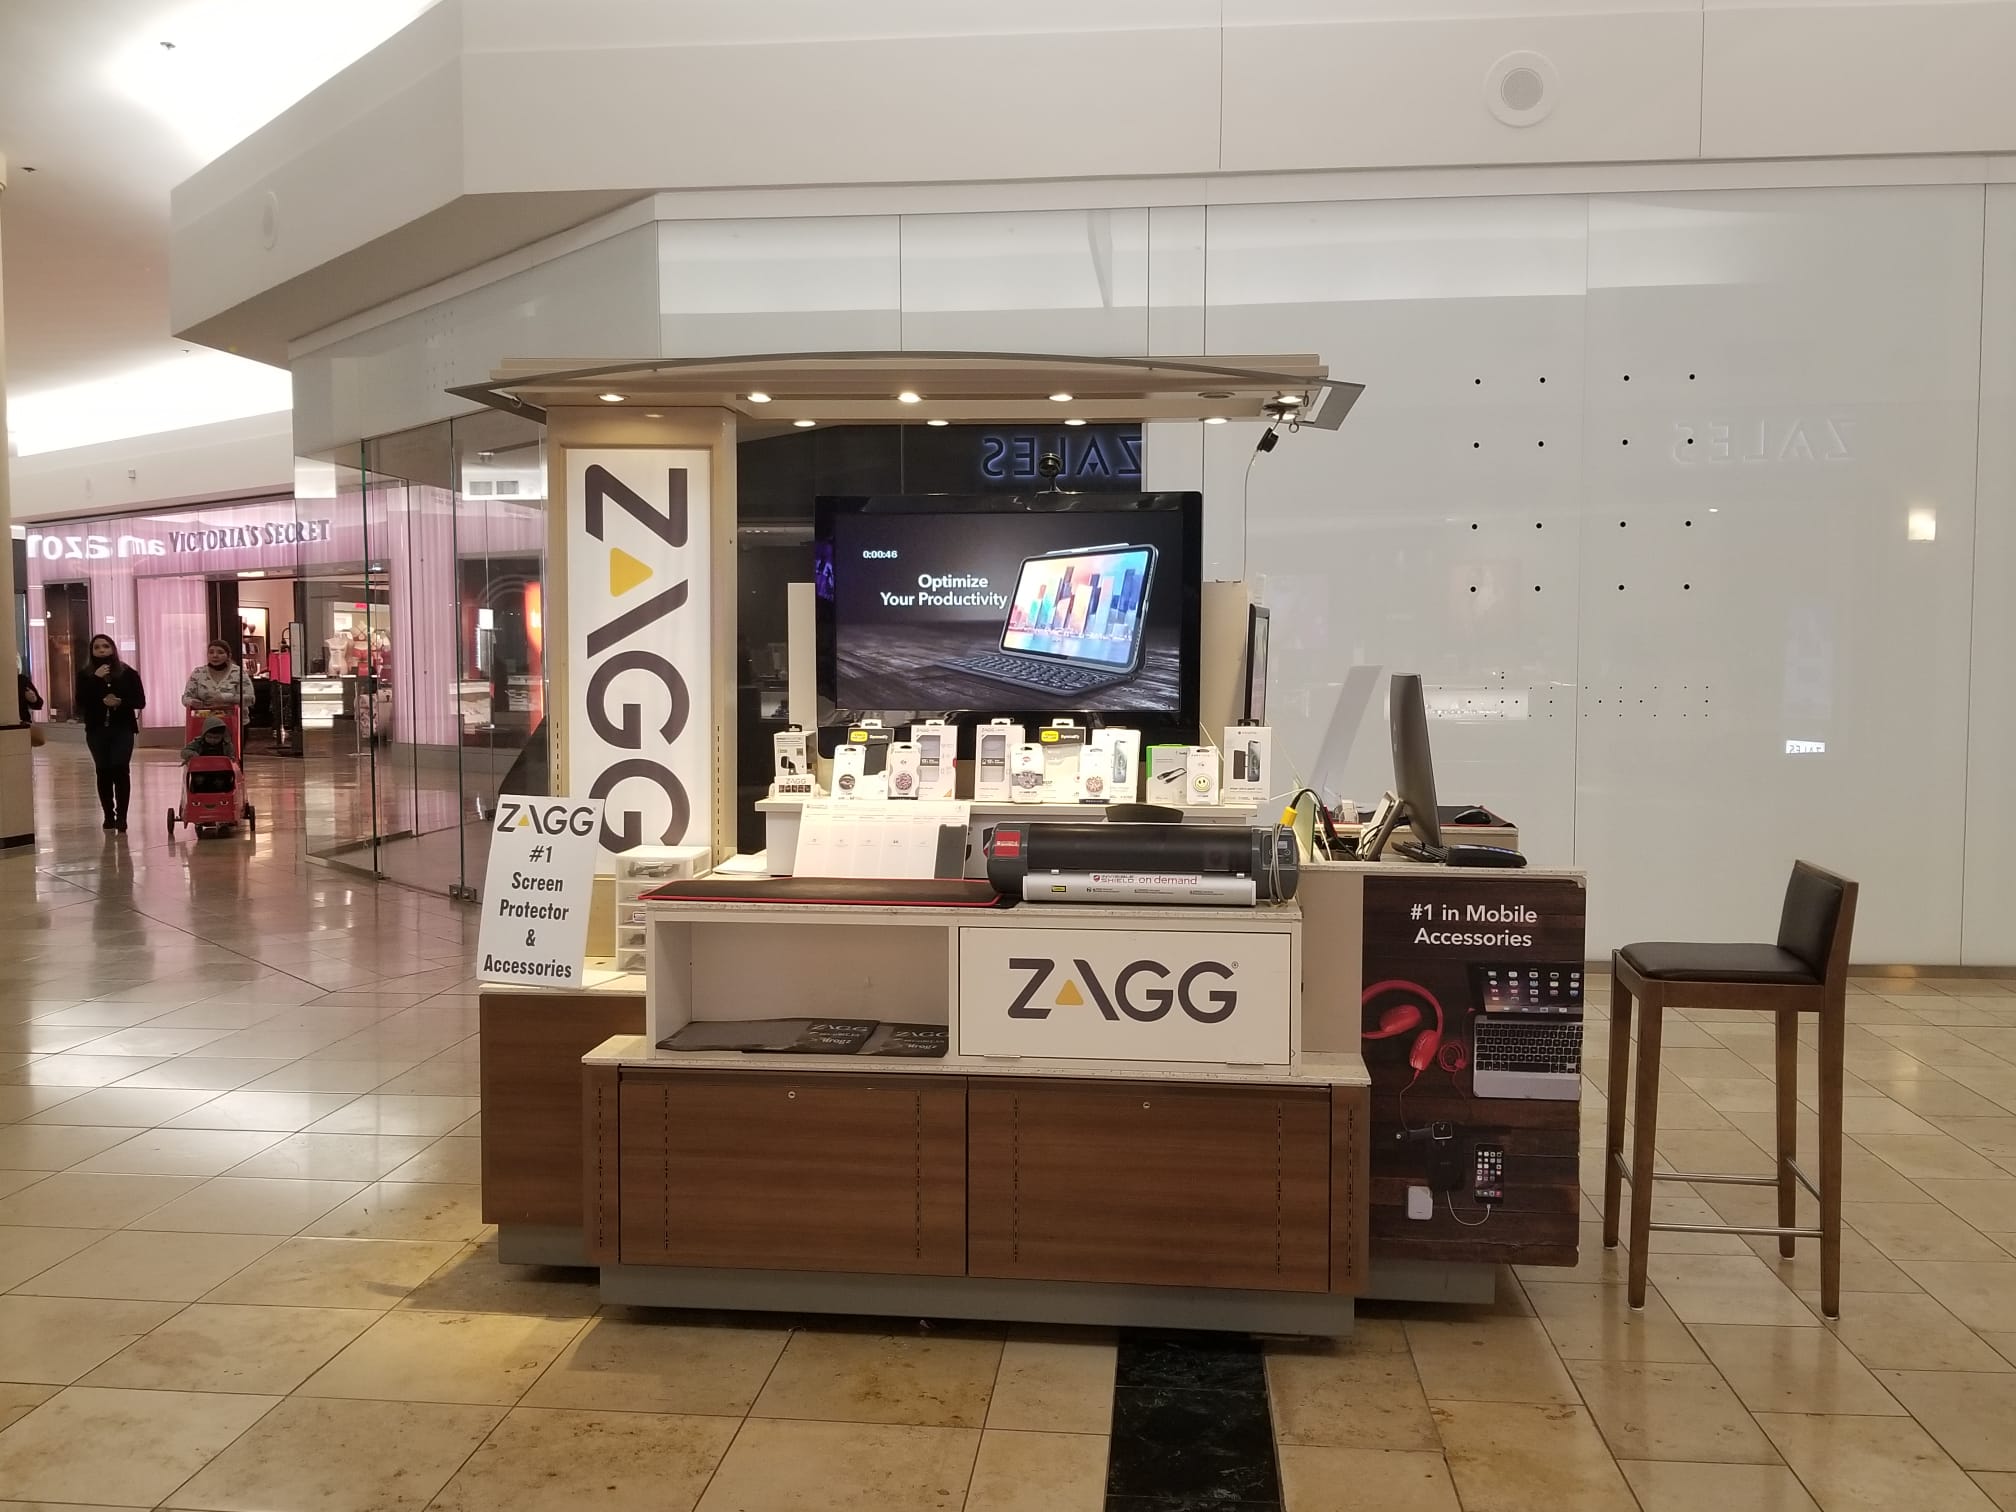 Storefront of ZAGG Baybrook TX